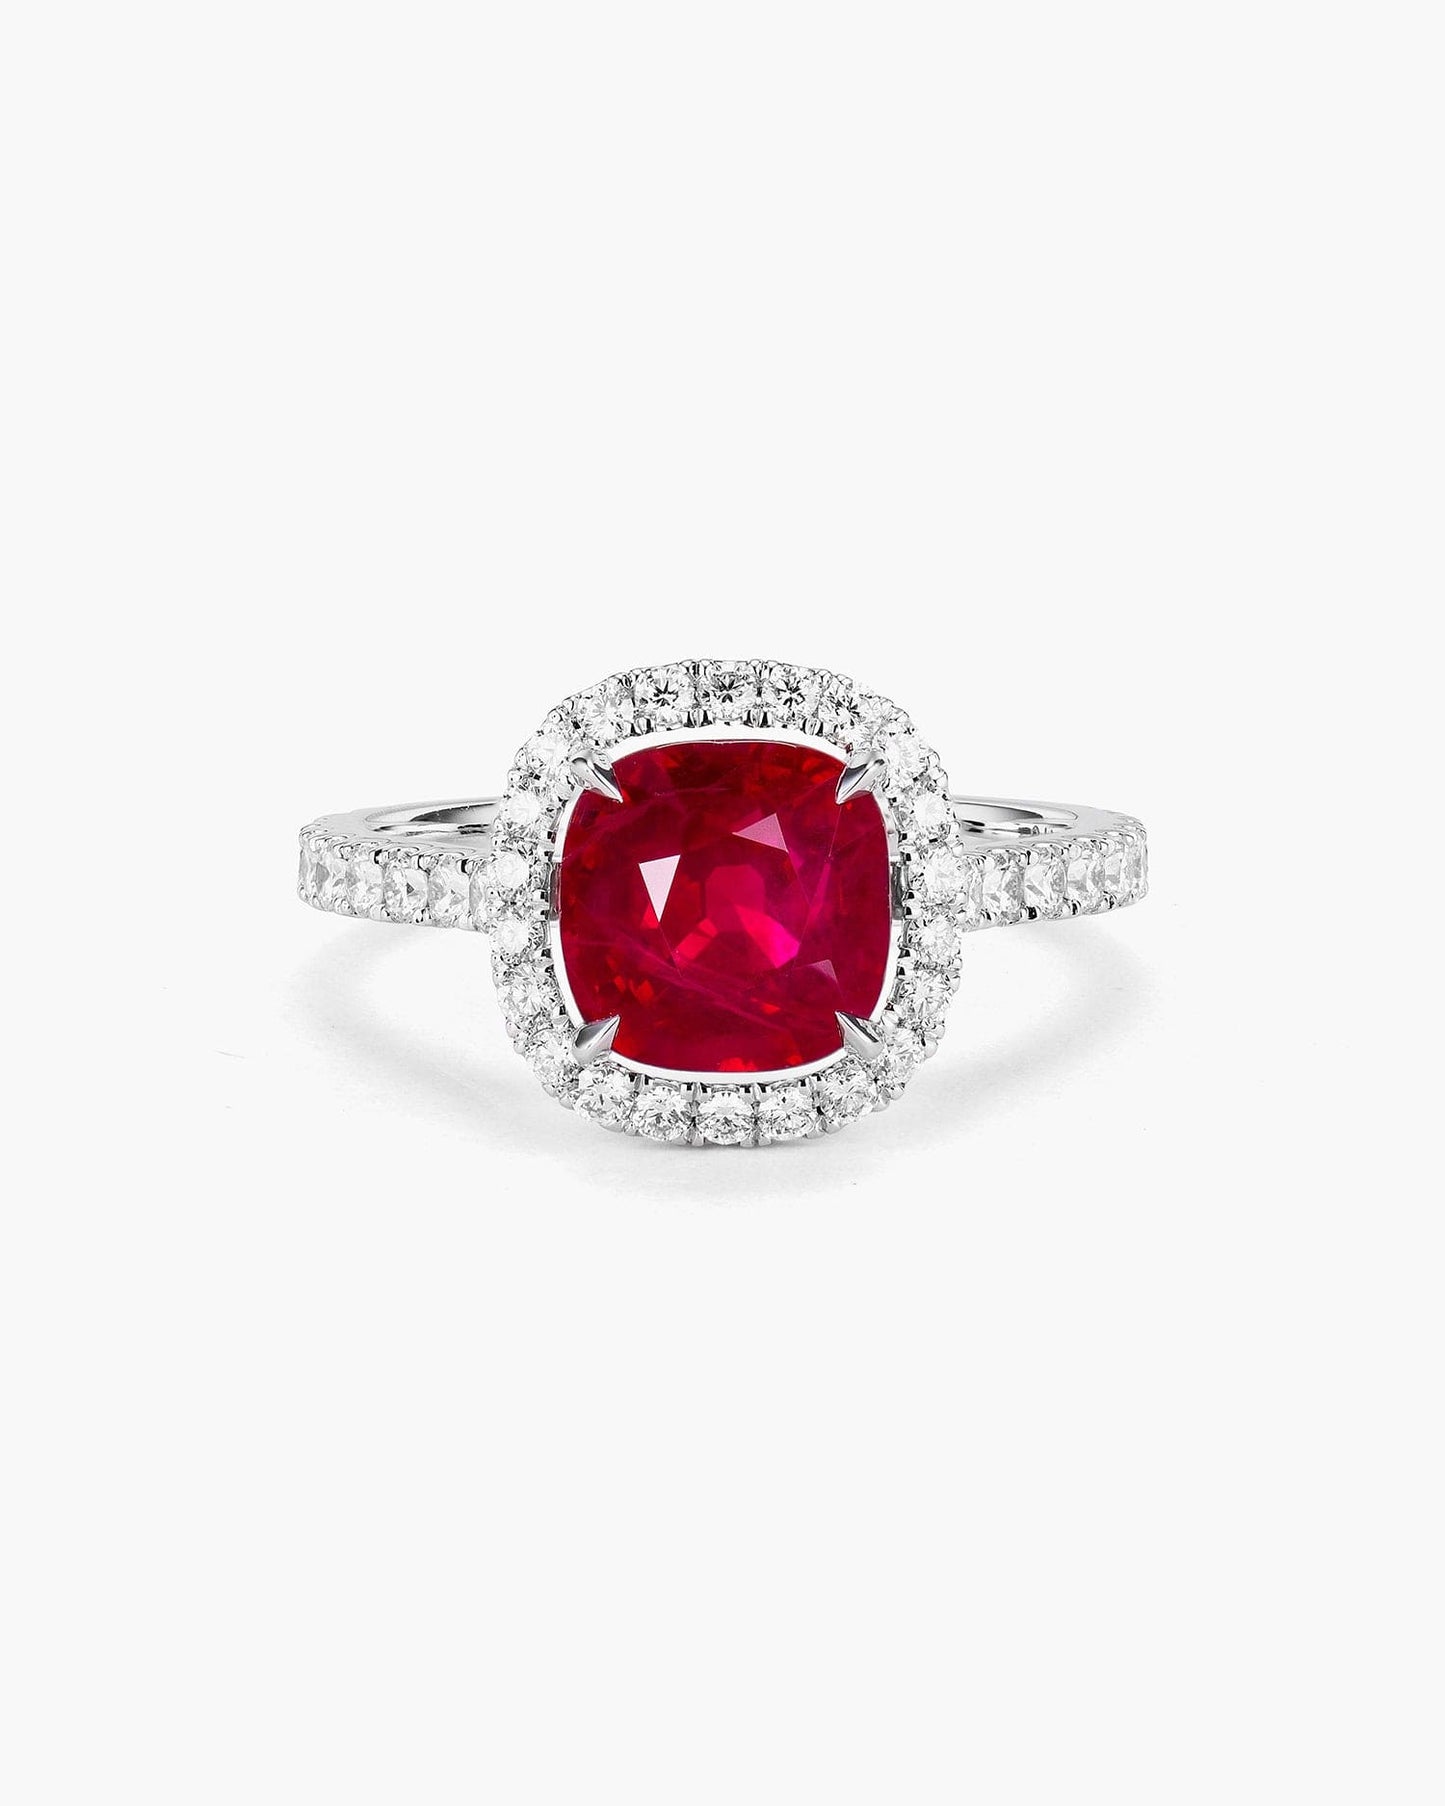 3.02 carat Cushion Cut Burmese Ruby and Diamond Ring